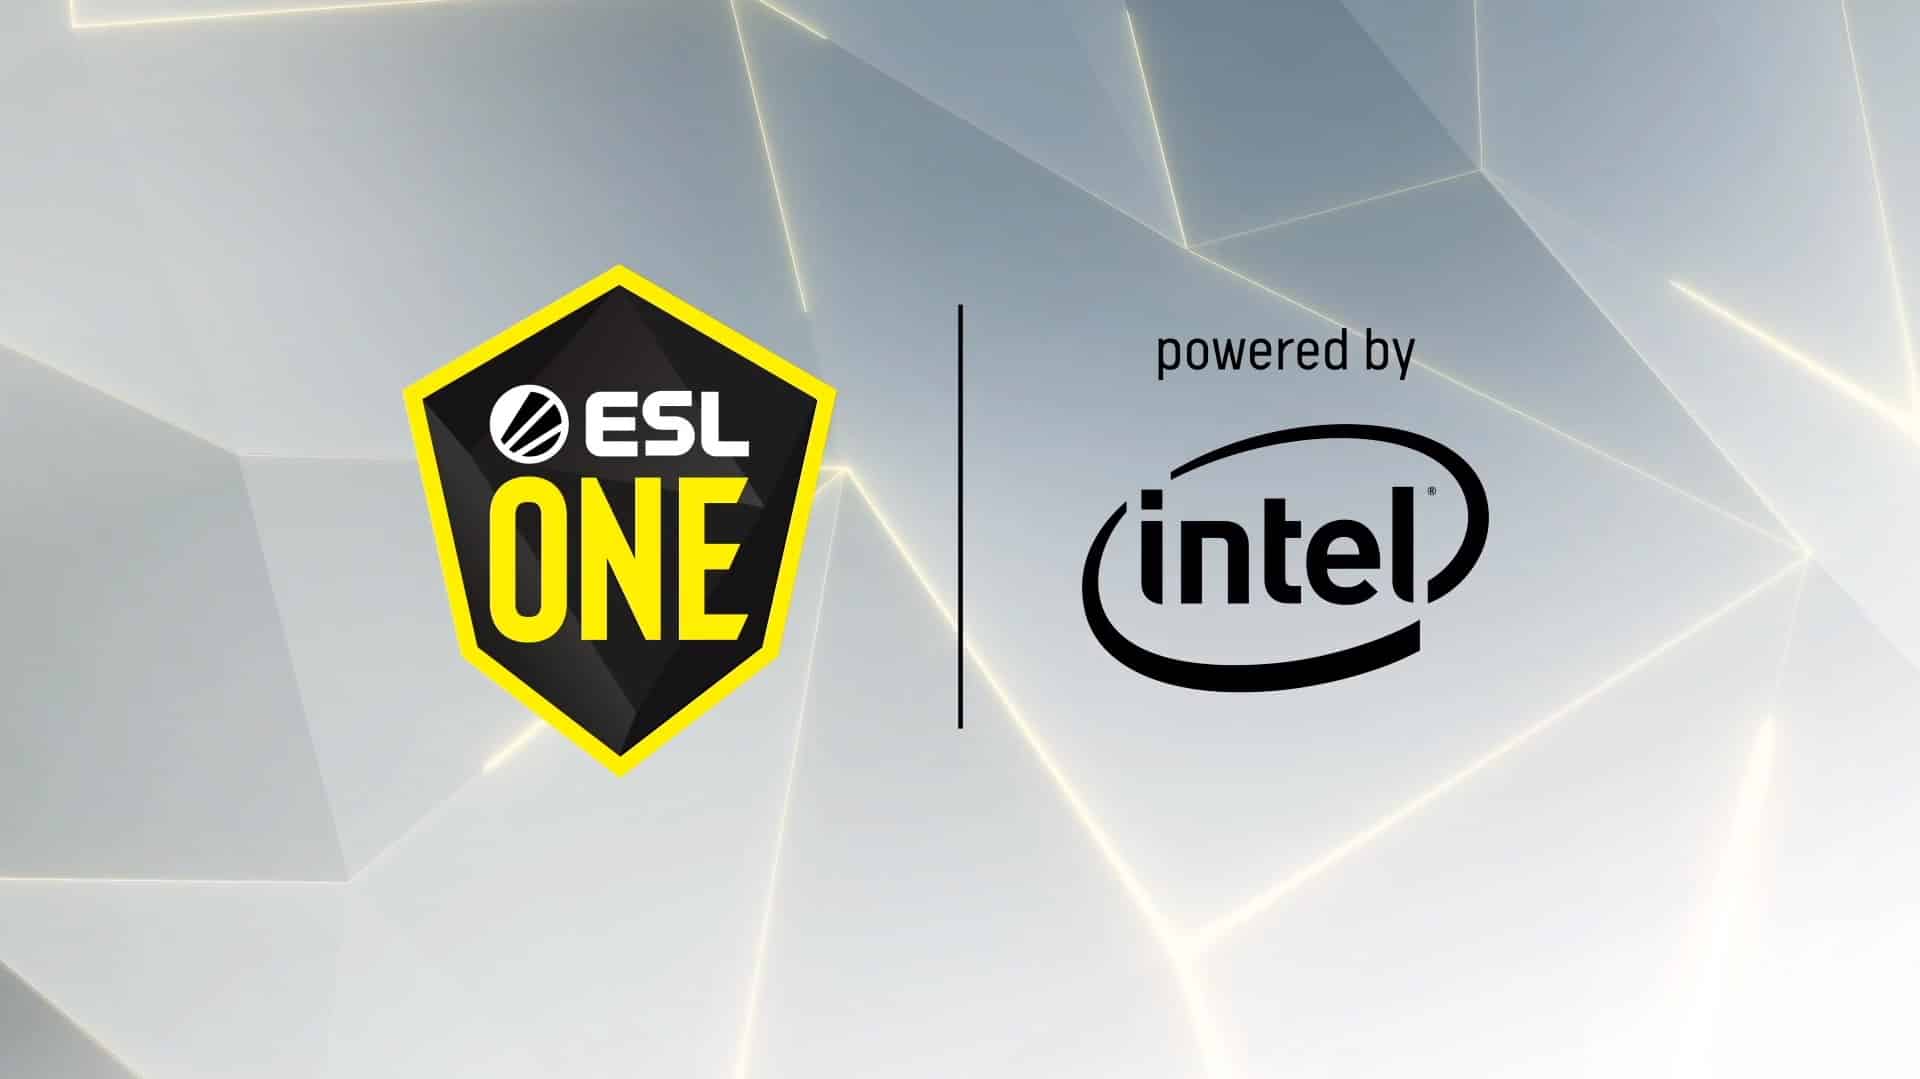 ESL One Logo